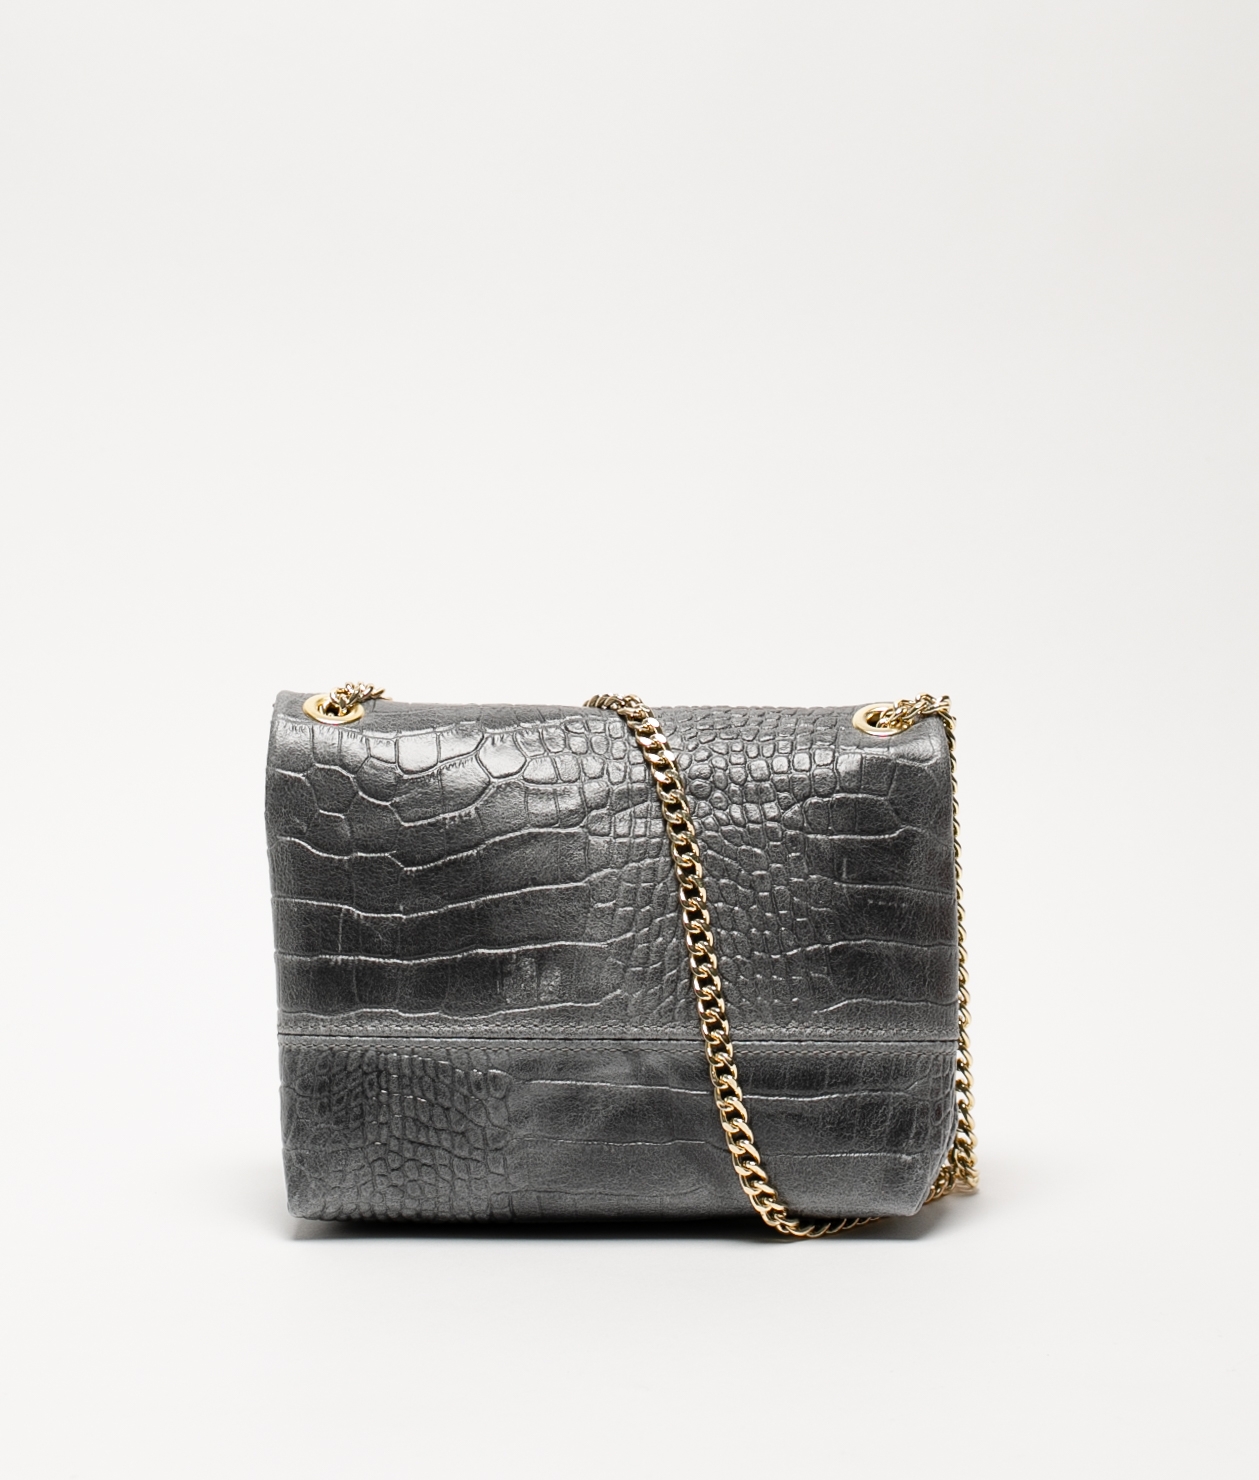 Leather bag Annabella - gray